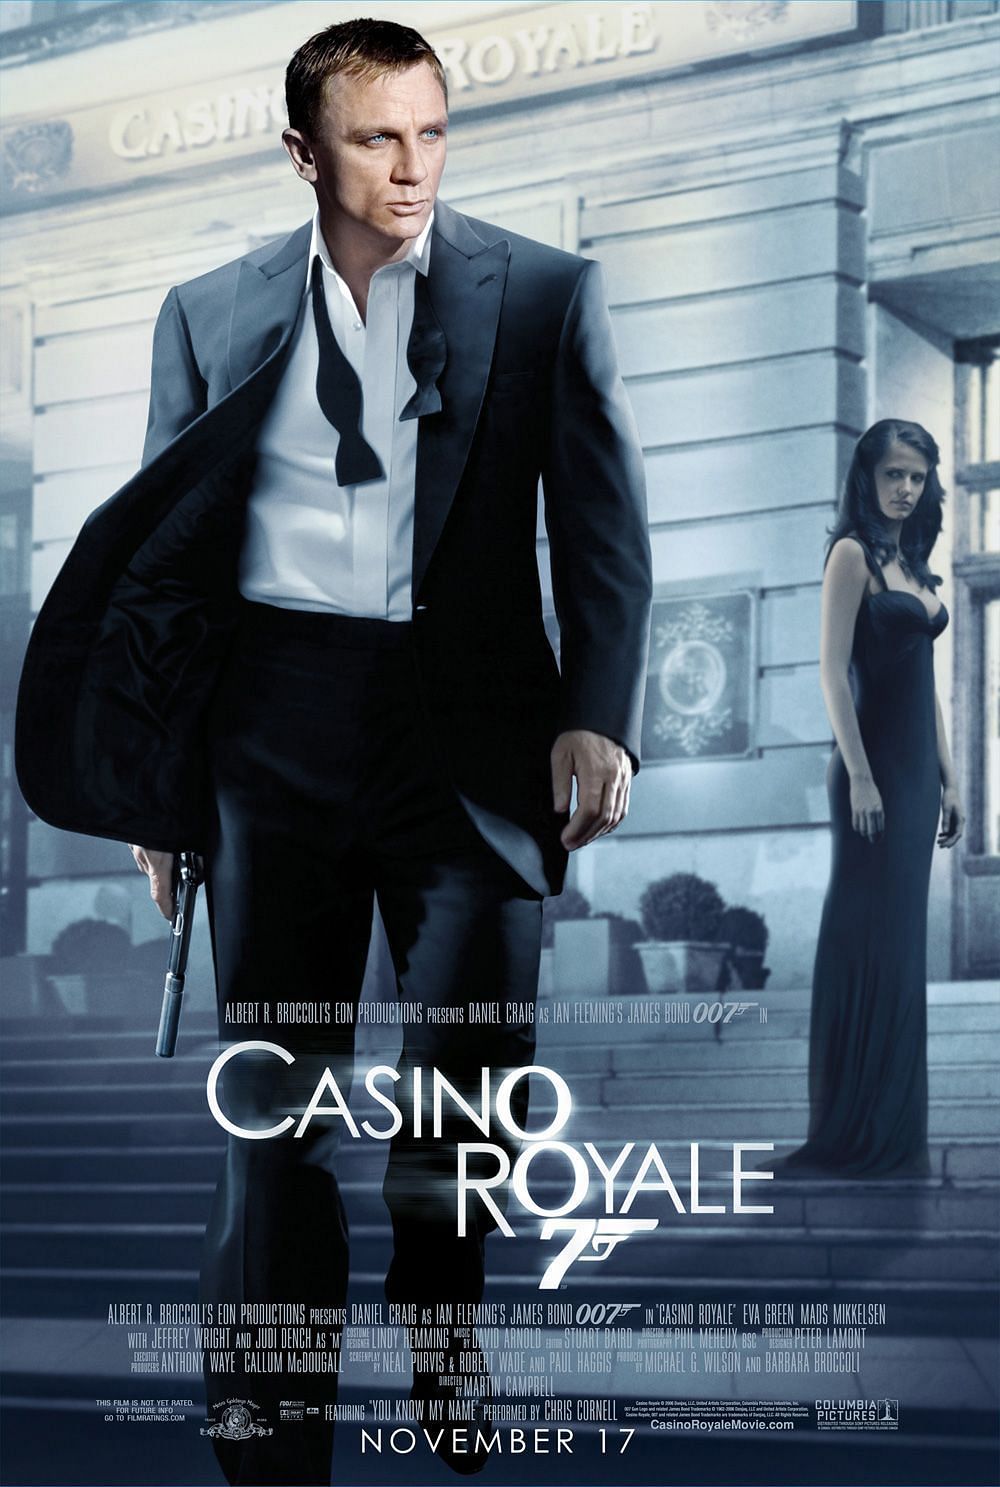 Casino Royale poster (Image via IMDB)